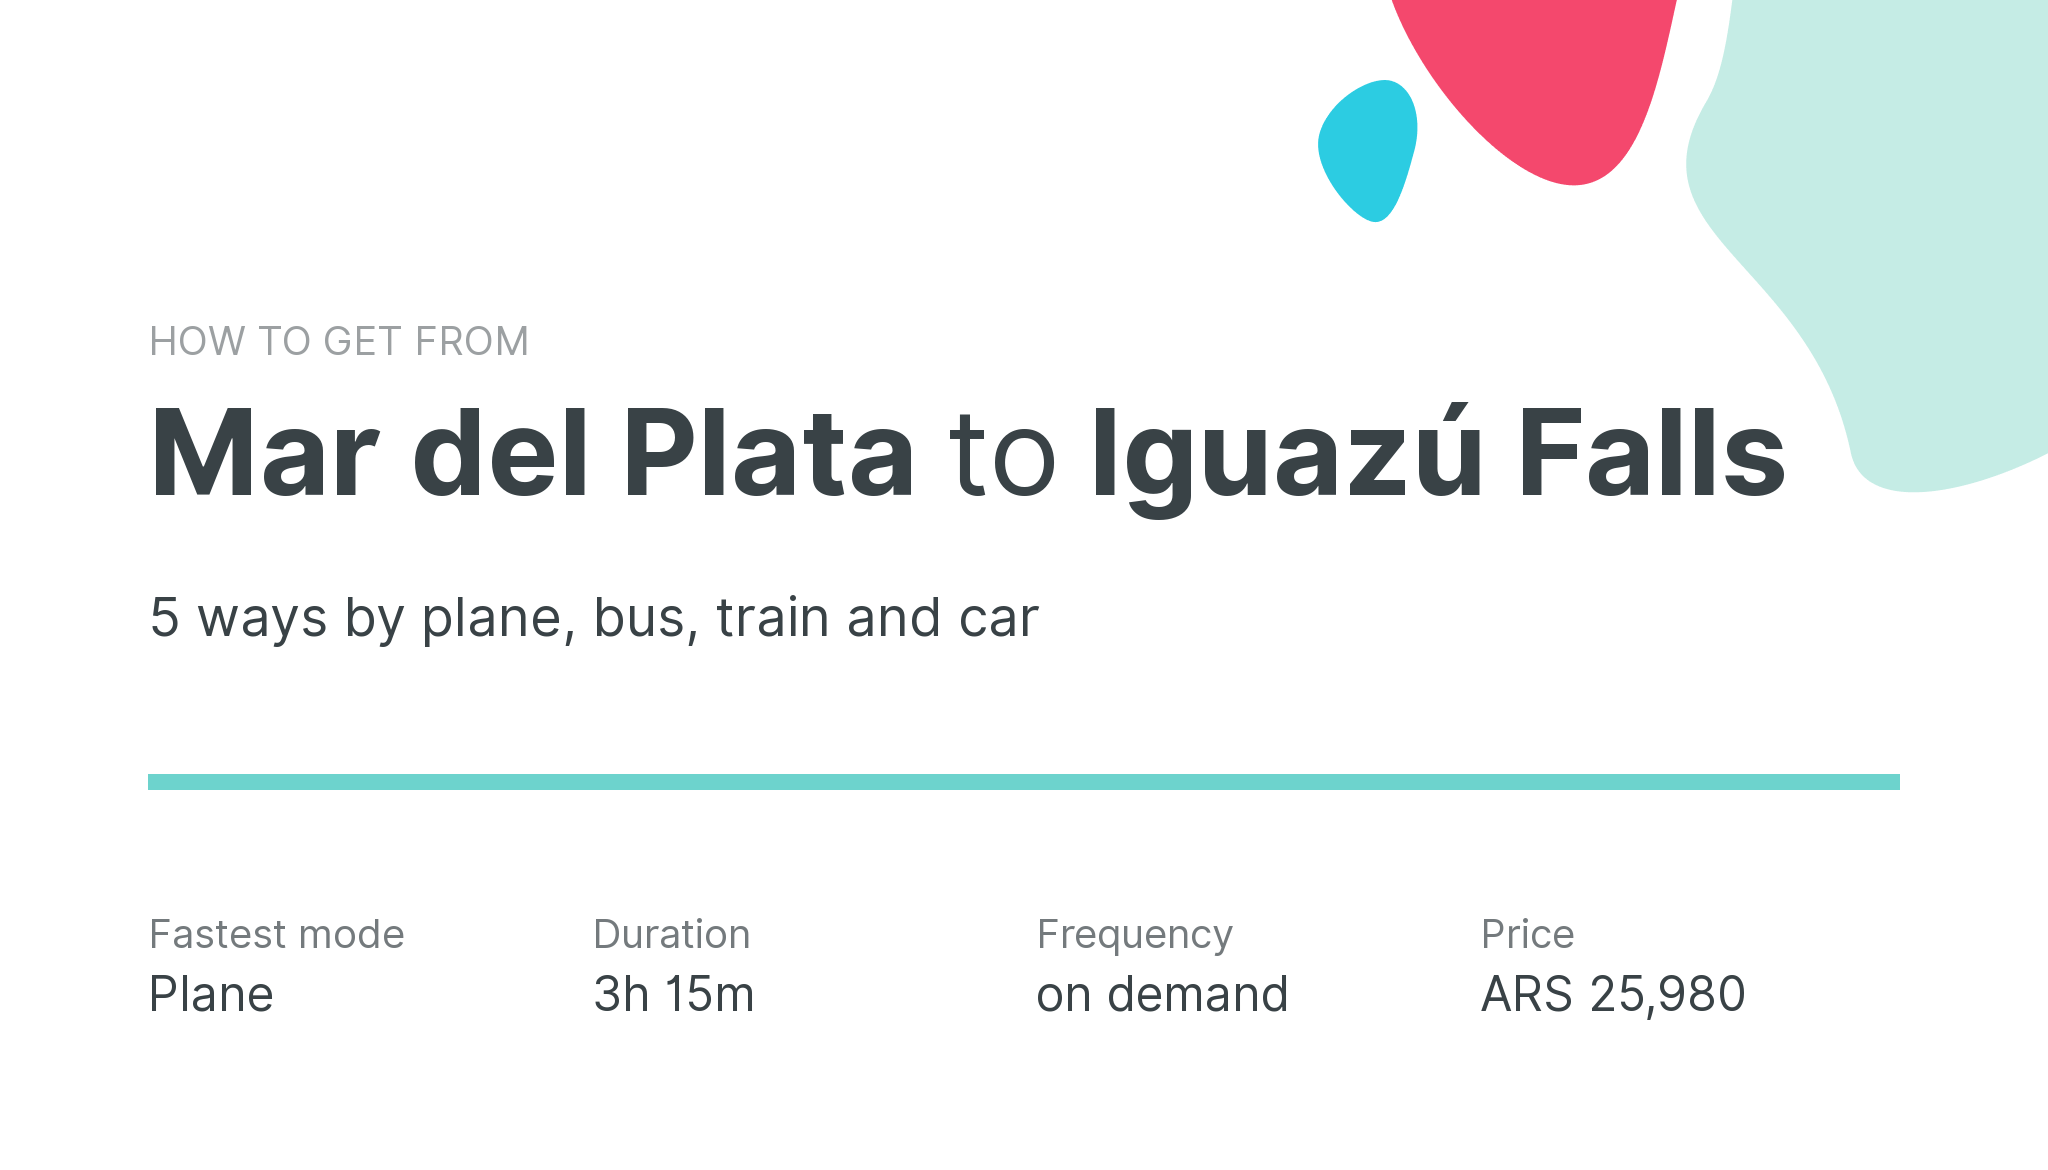 How do I get from Mar del Plata to Iguazú Falls